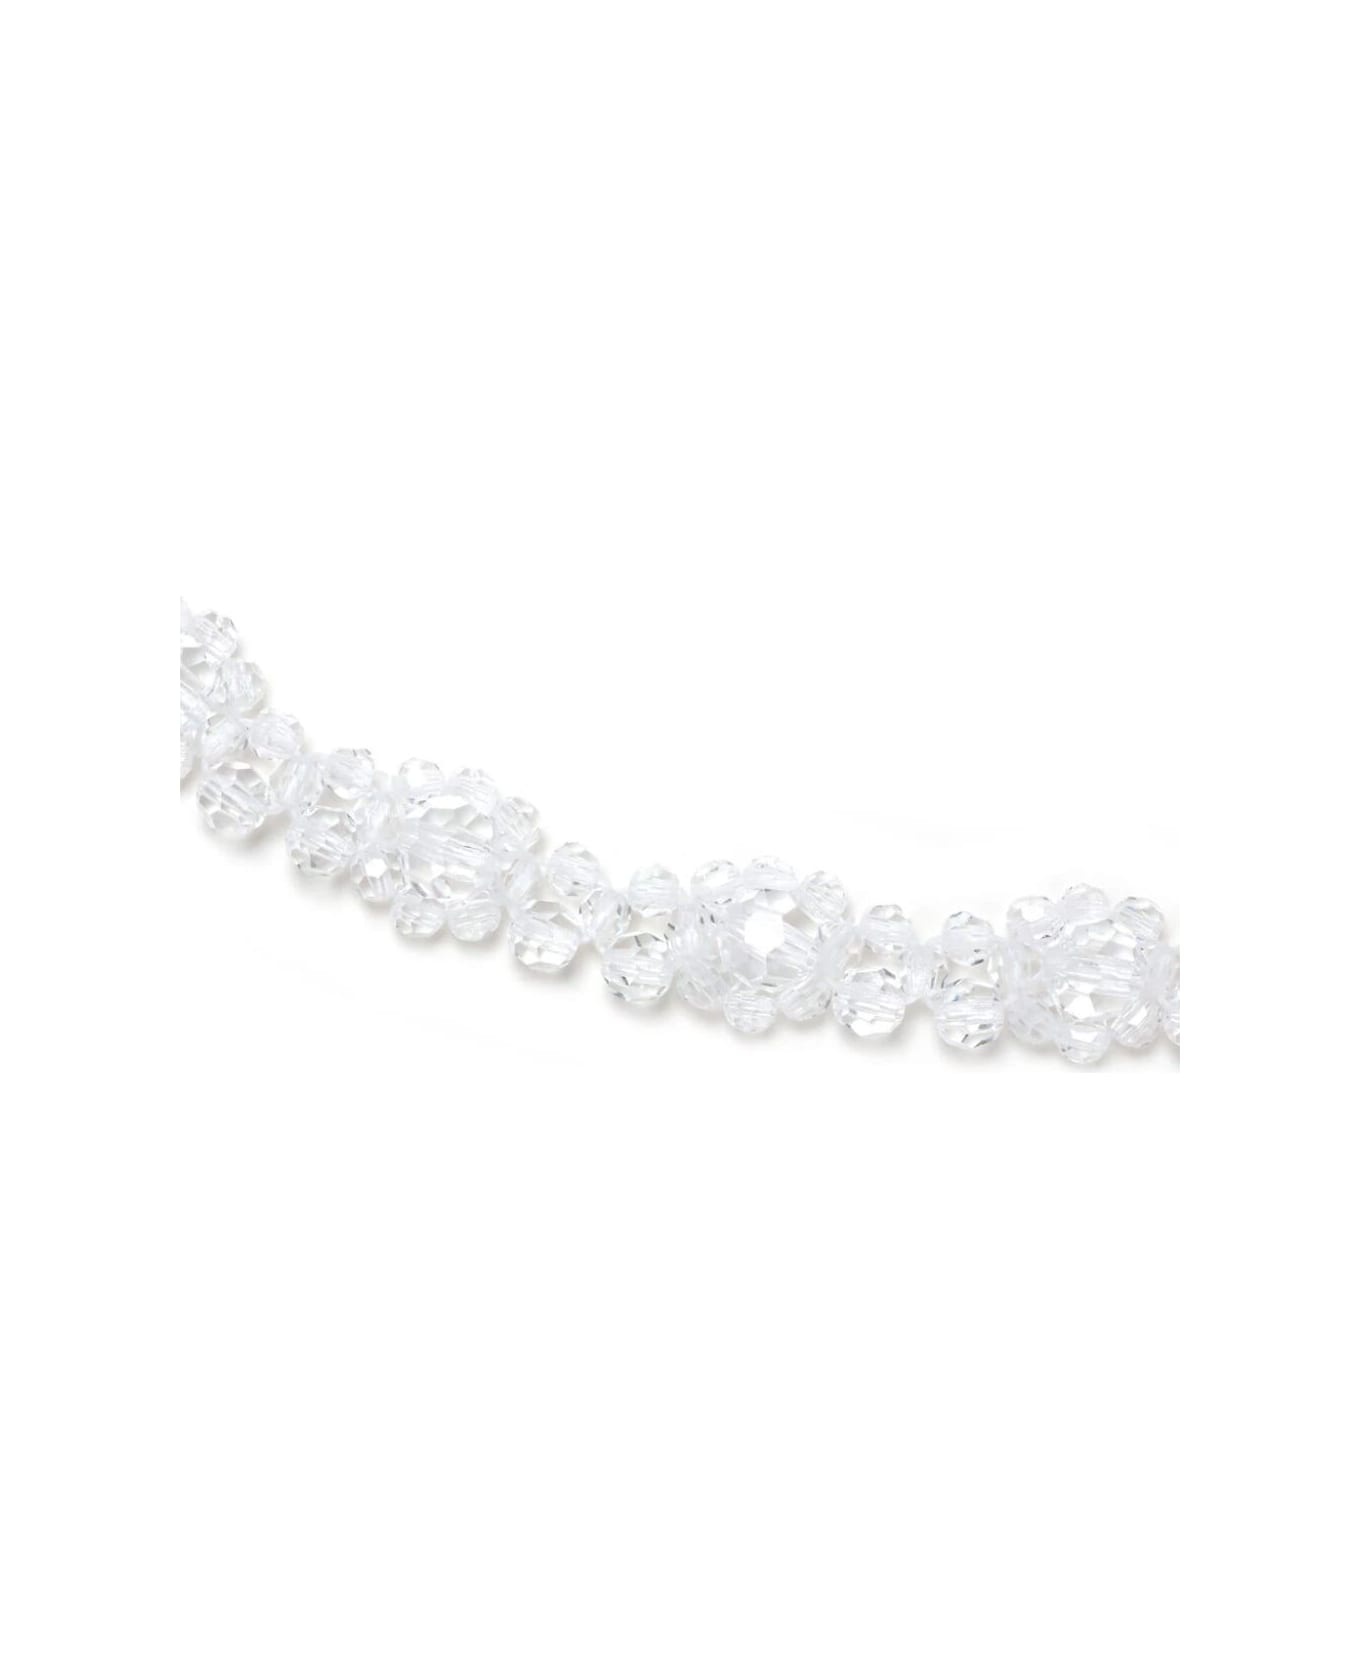 Crystal Daisy Chain Necklace - 3